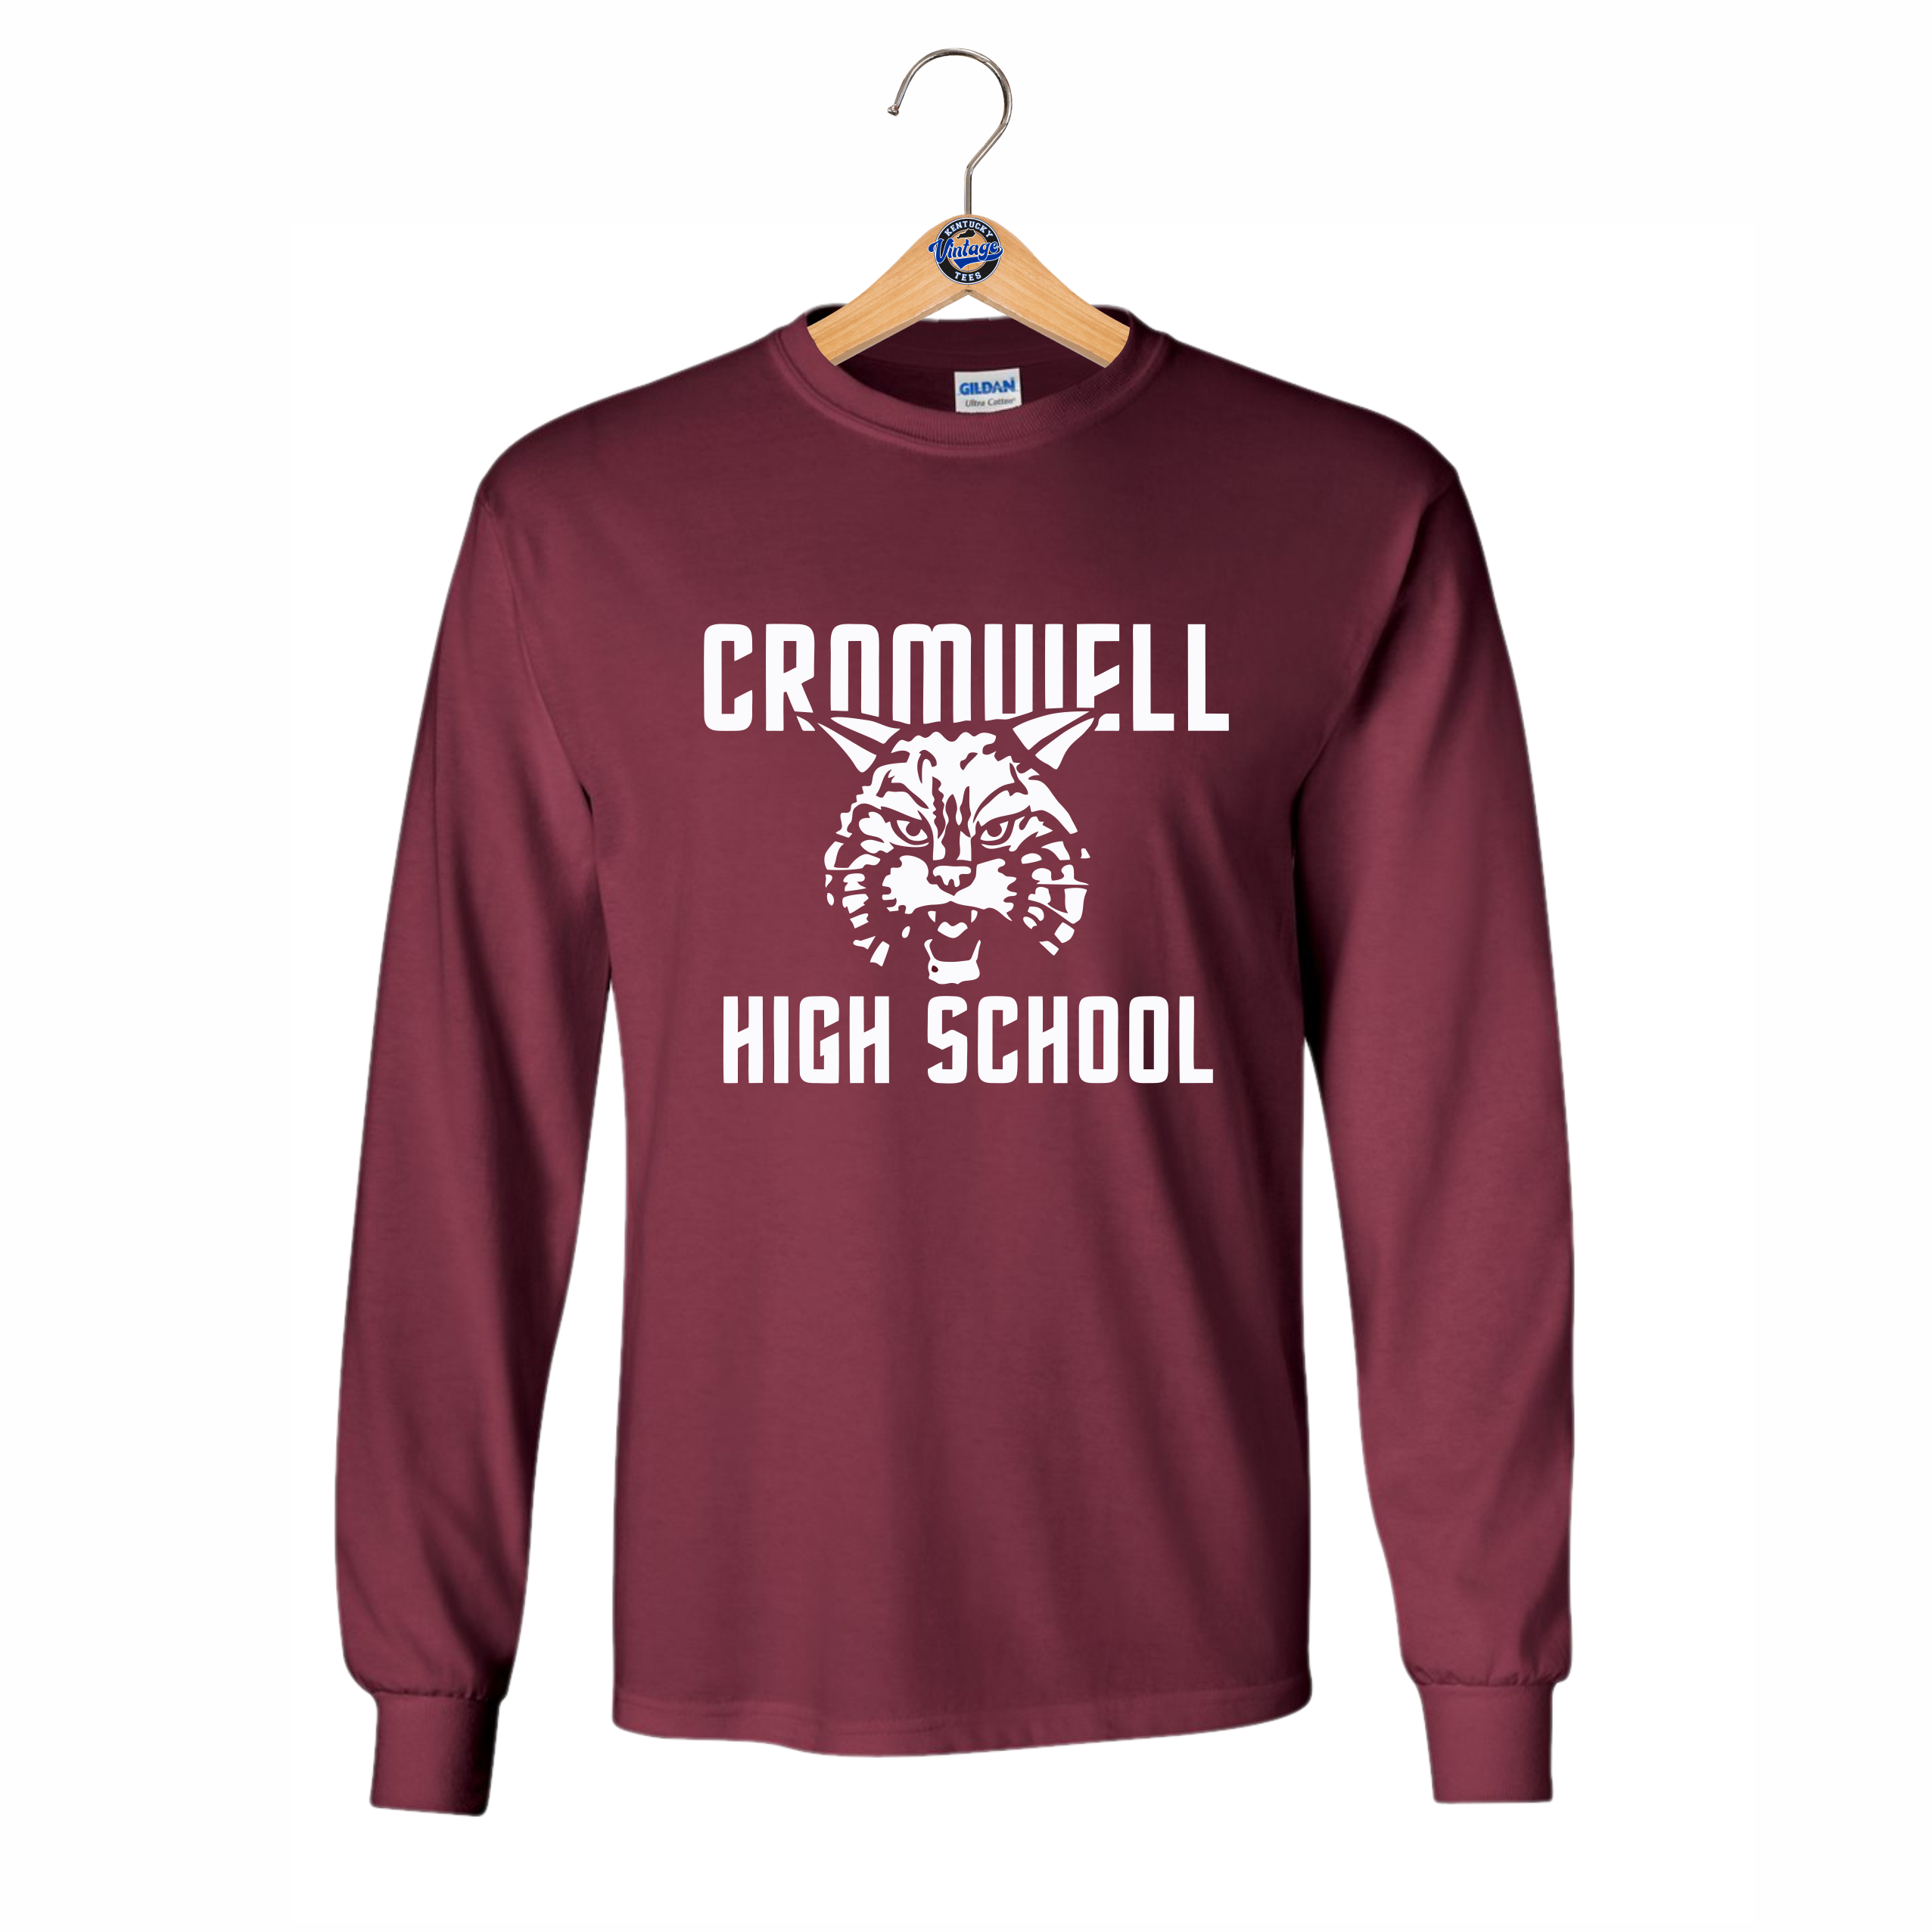 Cromwell High School